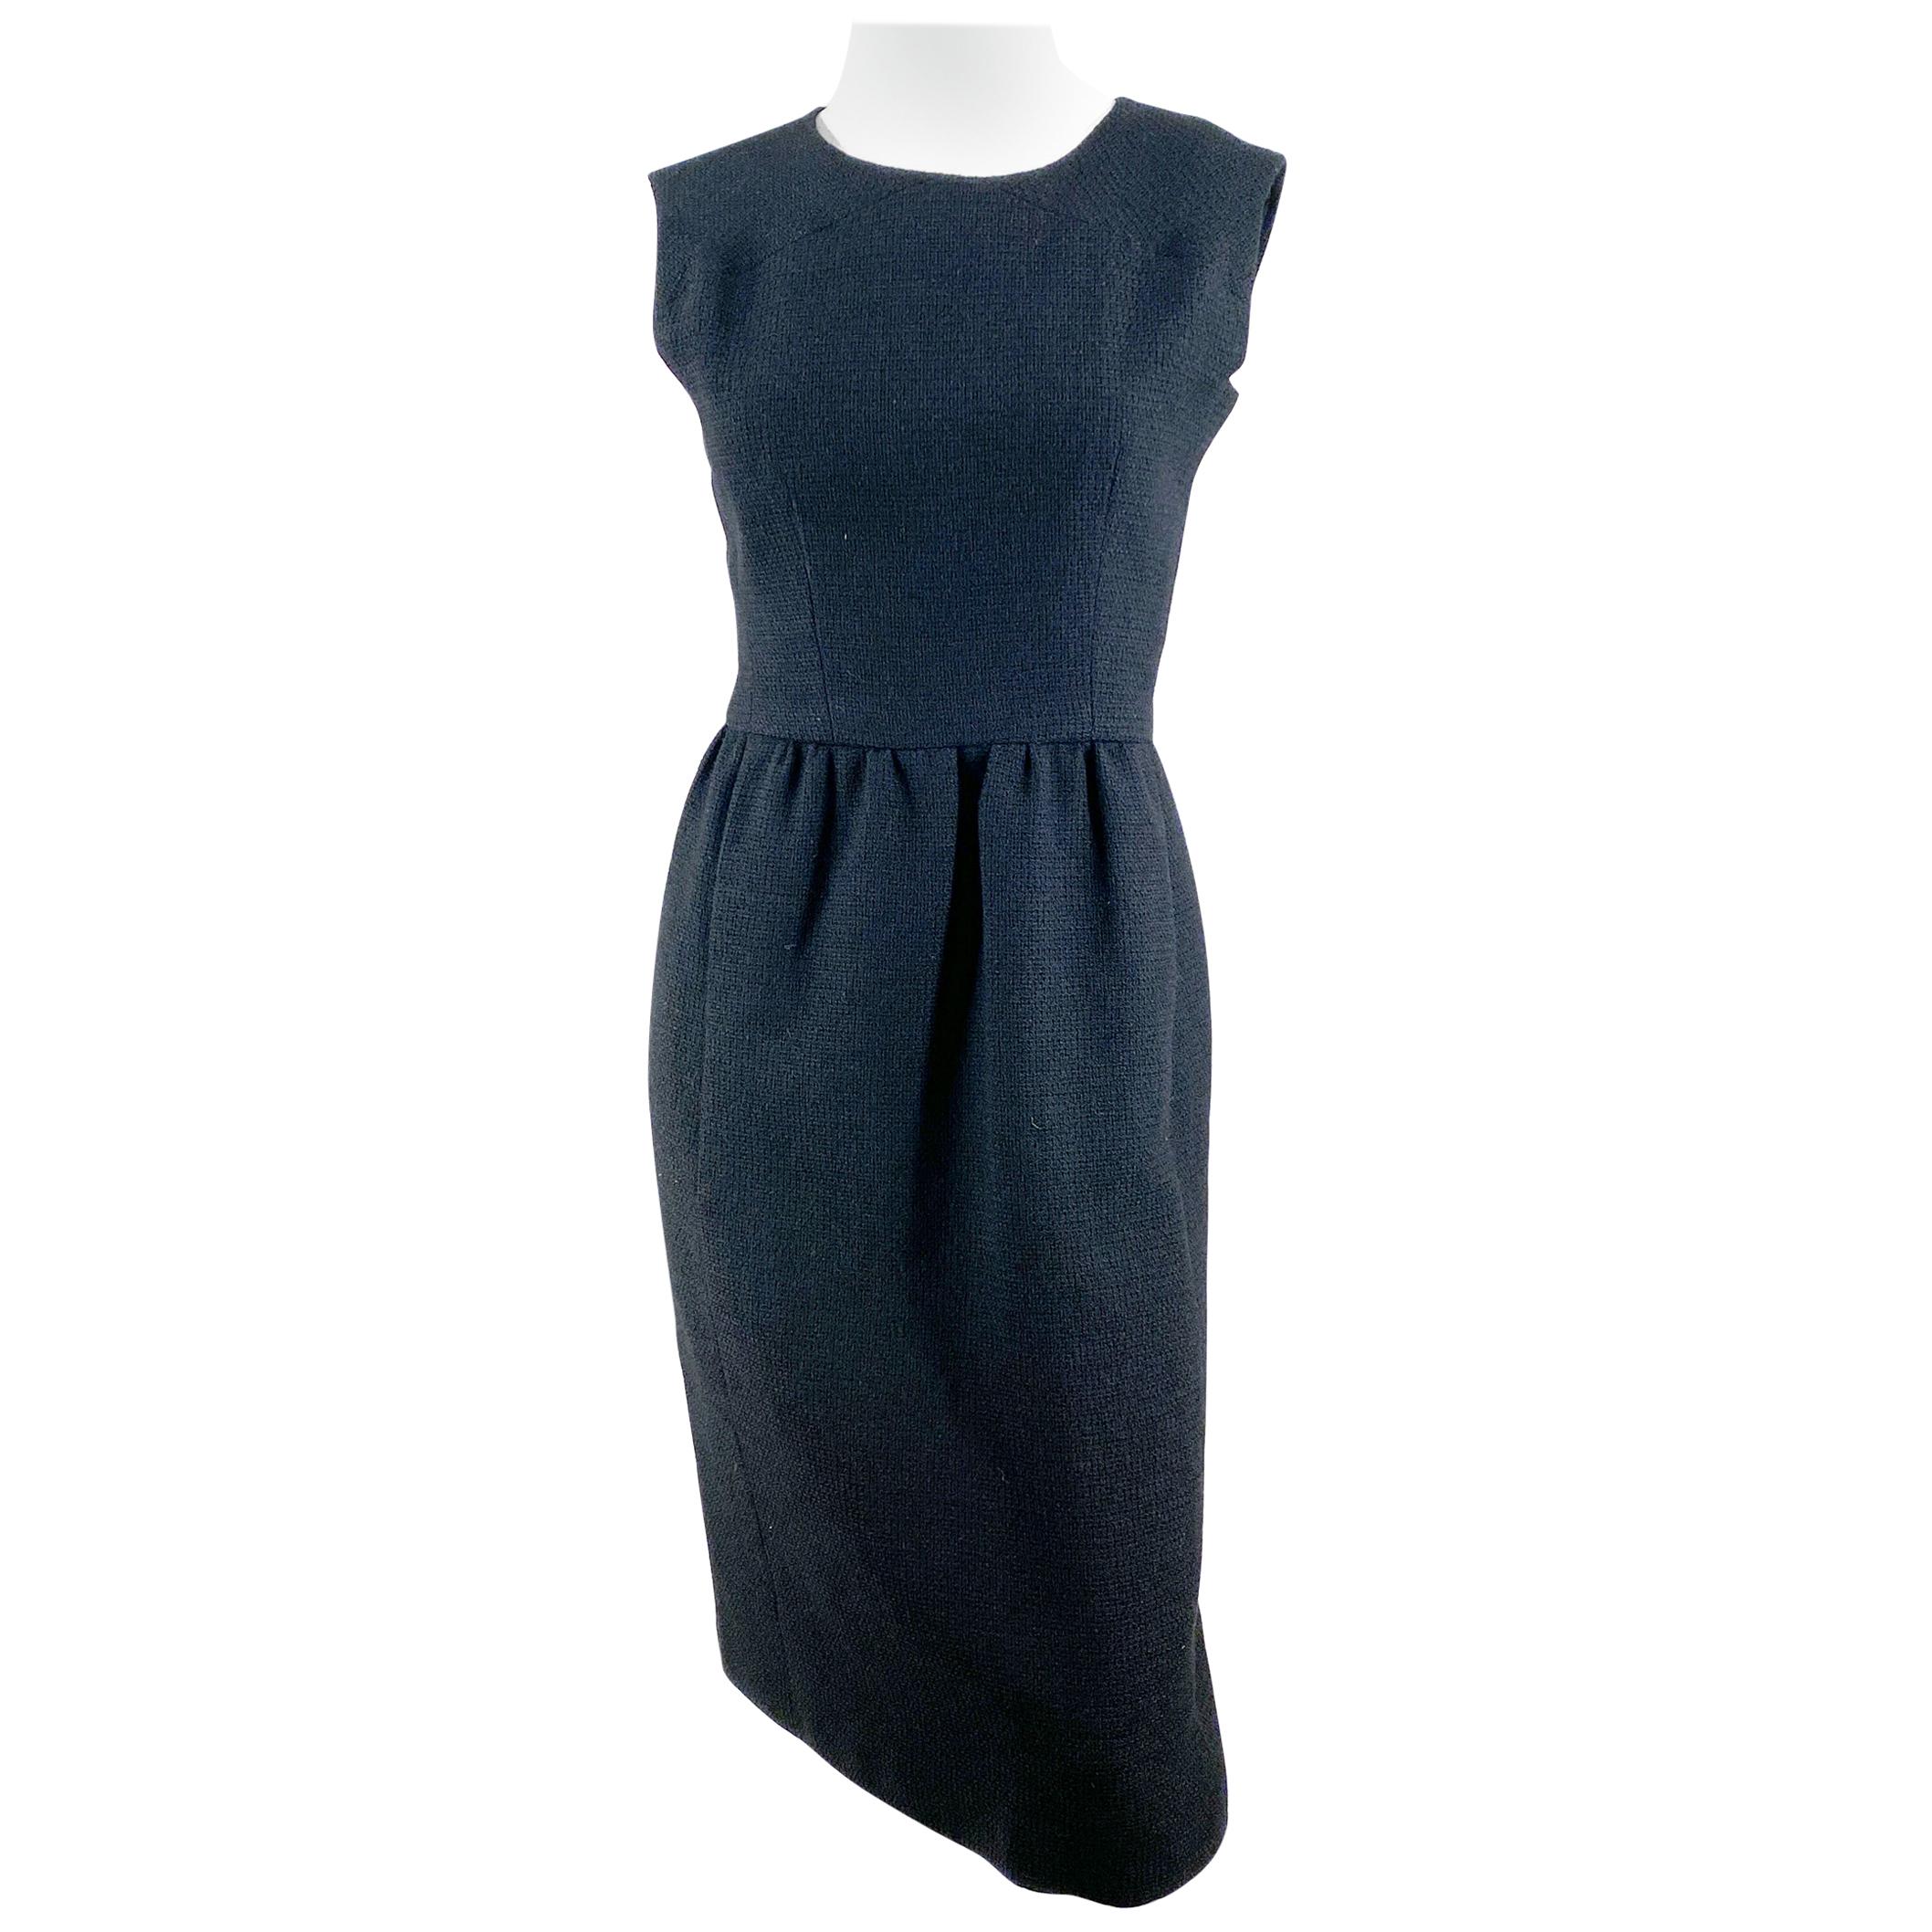 1950s/1960s Black Wool Dress For Sale